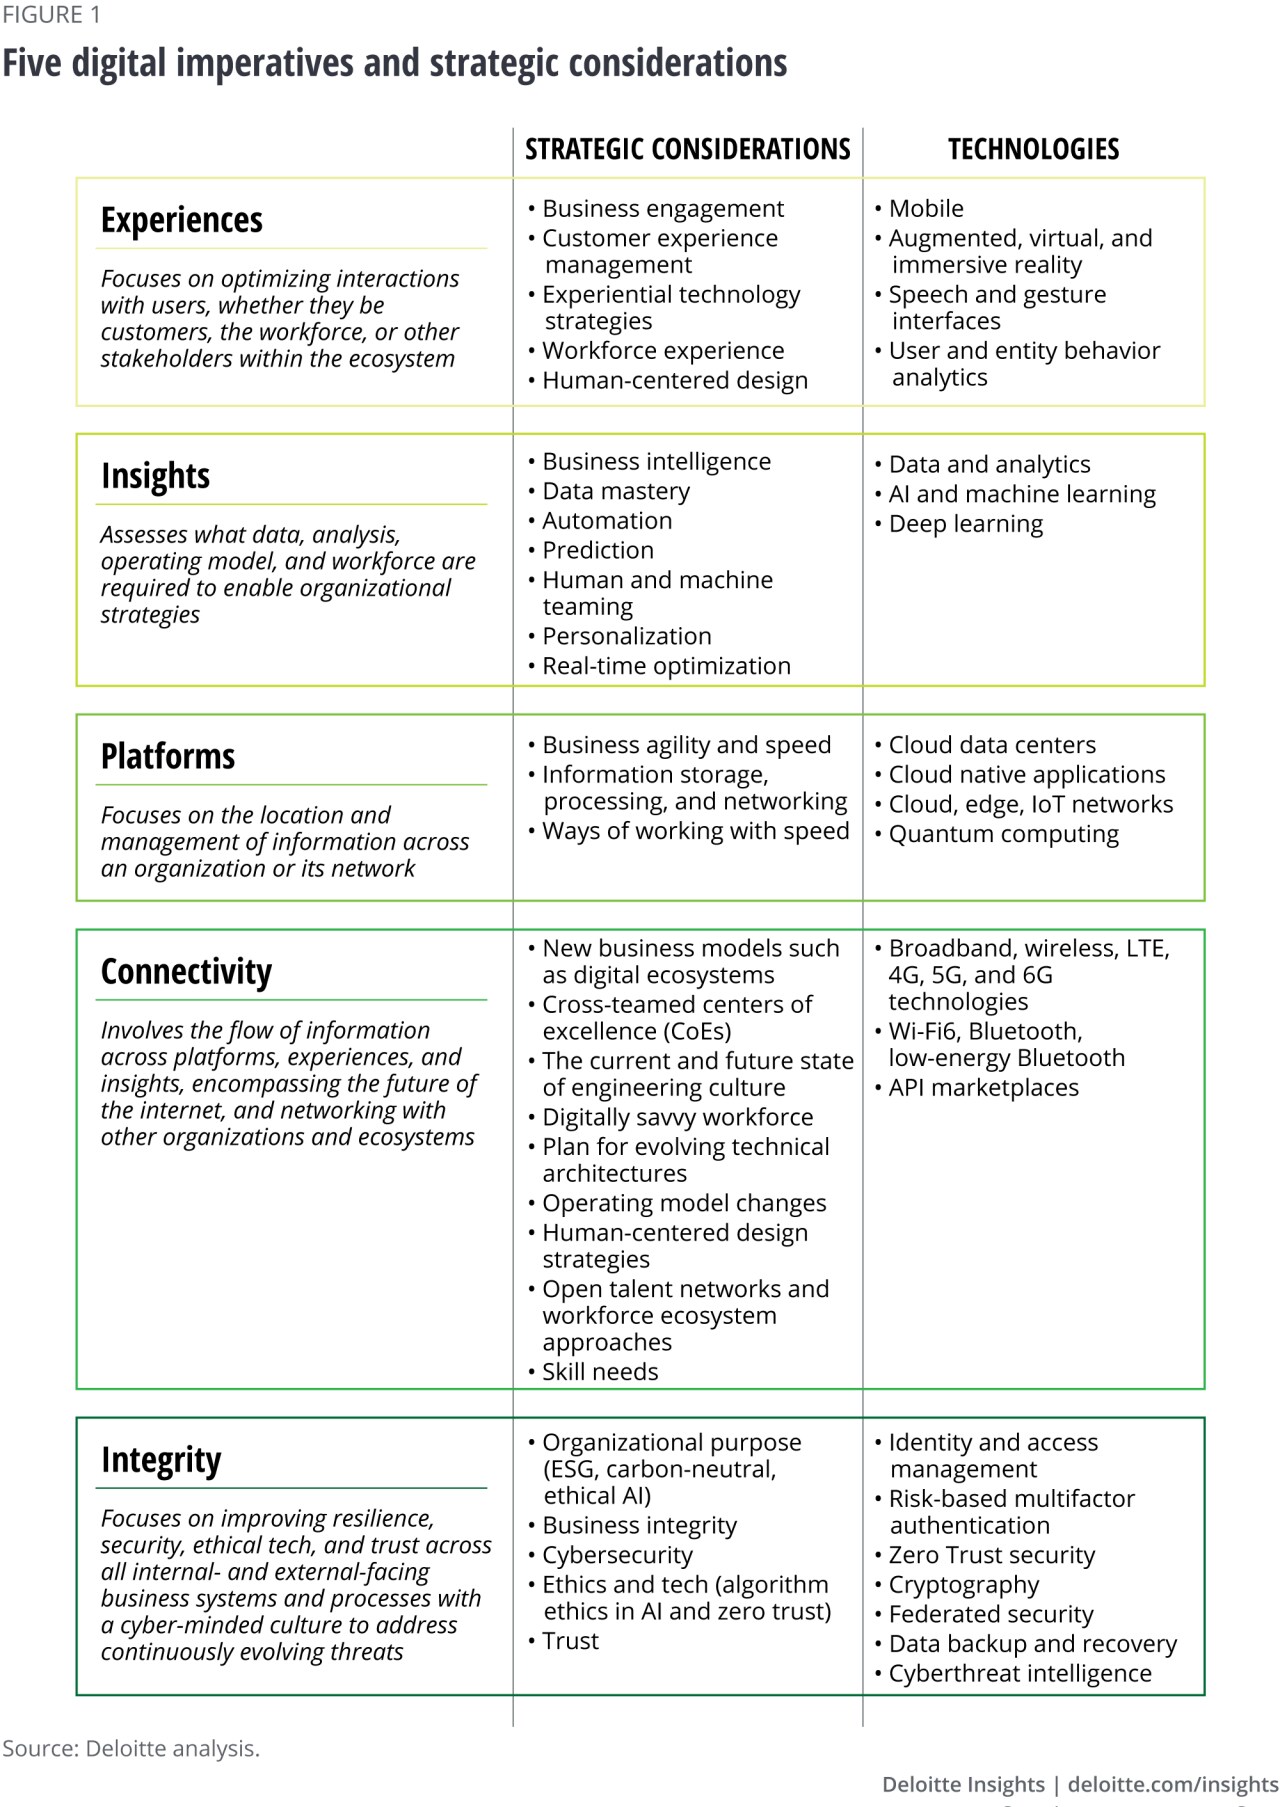 Figure 1. Five digital imperatives and strategic considerations